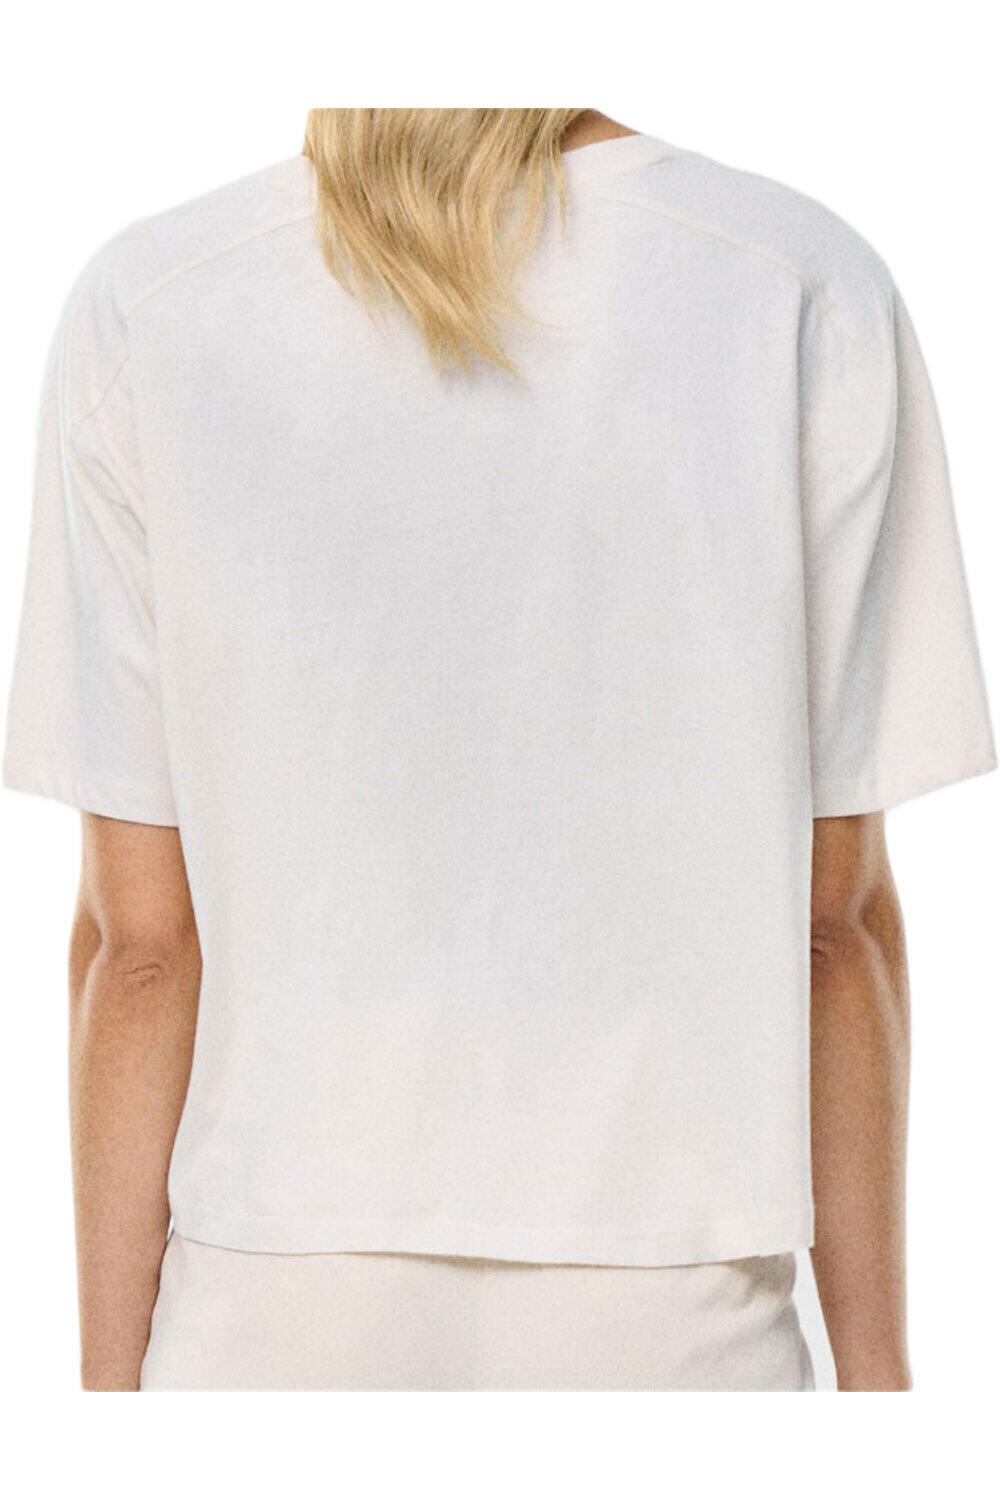 Ecoalf camiseta manga corta mujer BITTERALF T-SHIRT vista trasera